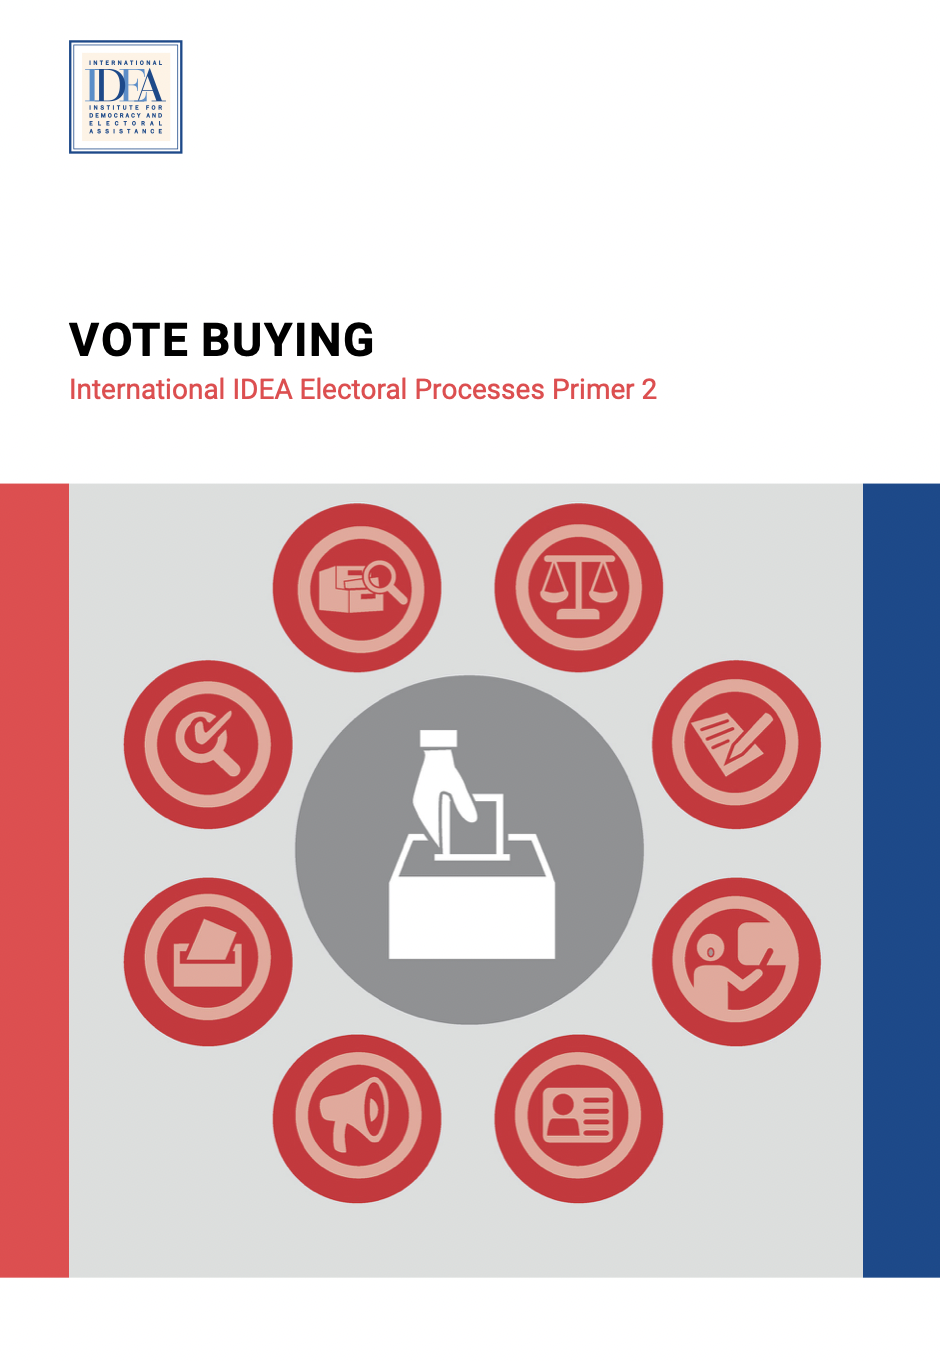 VOTE BUYING: International IDEA Electoral Processes Primer 2